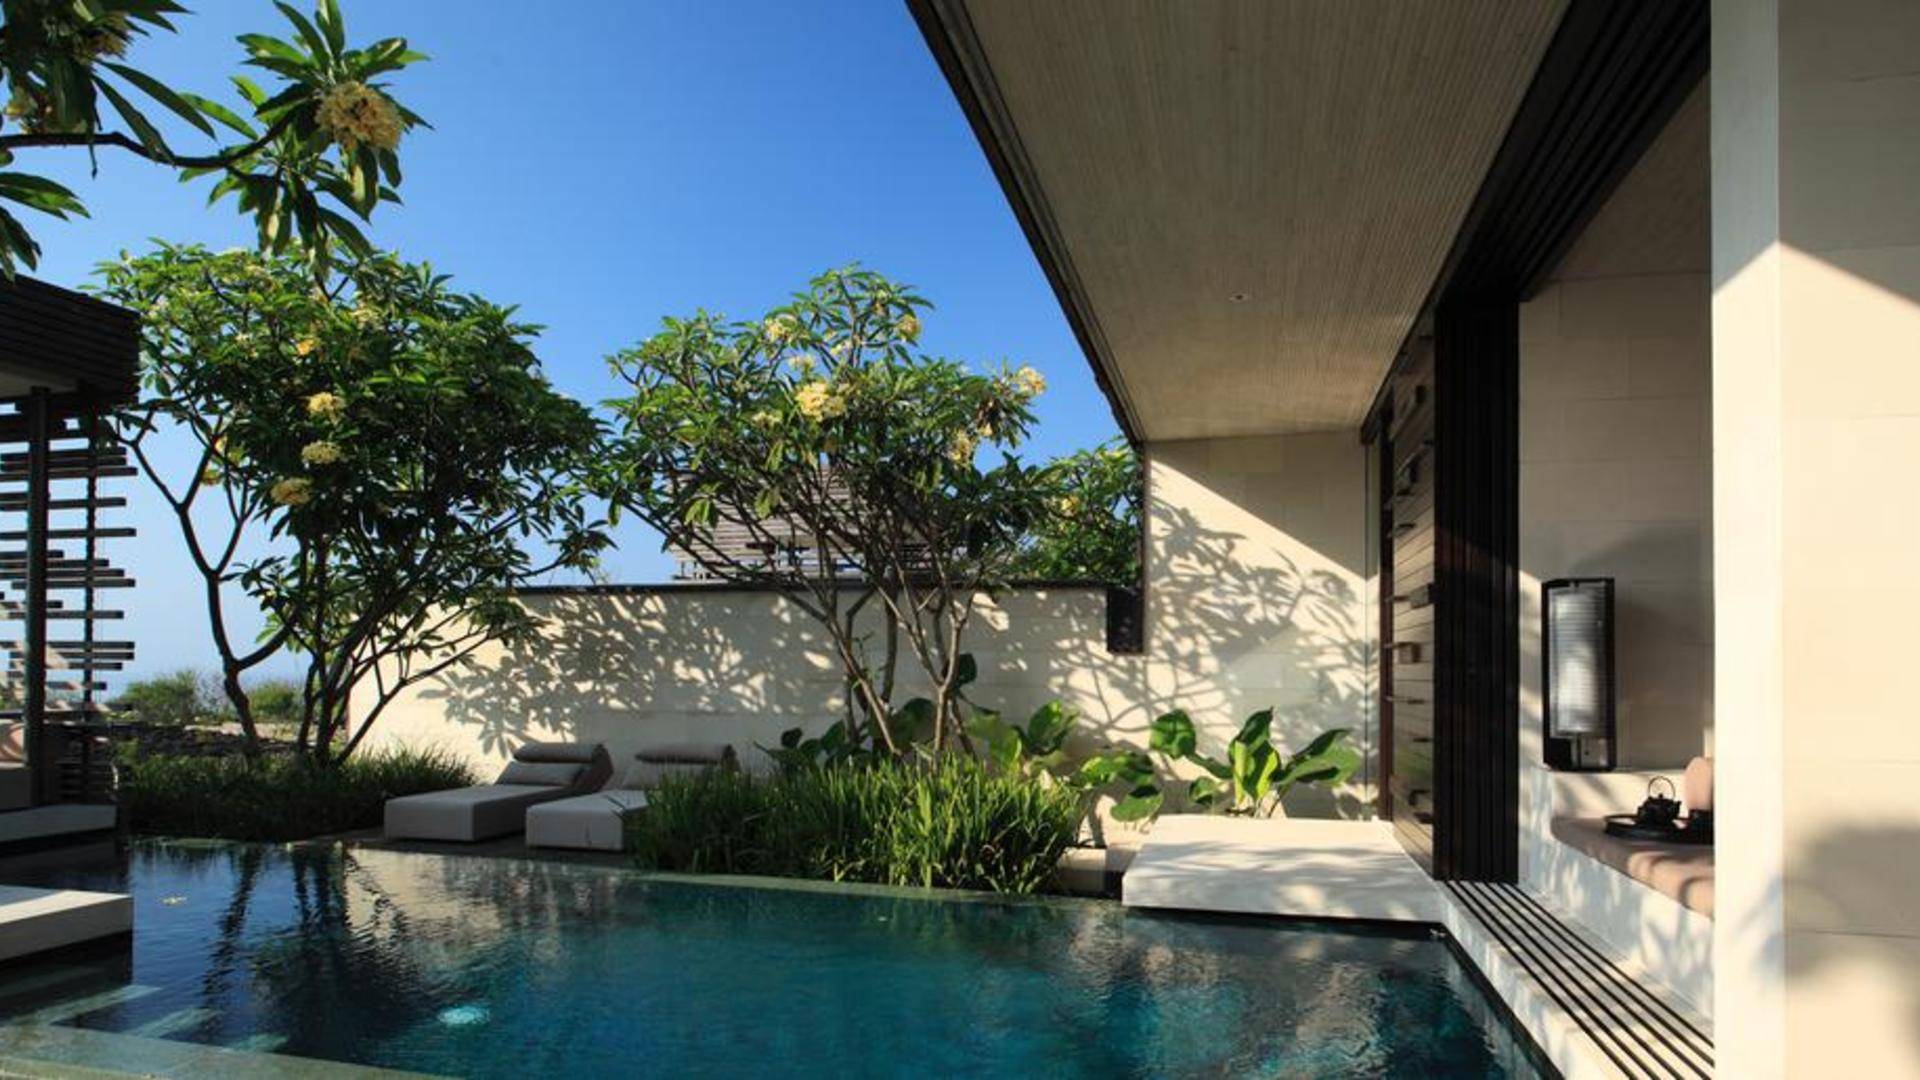 Full review: hyatt’s alila villas uluwatu bali – $1k a night pool villa